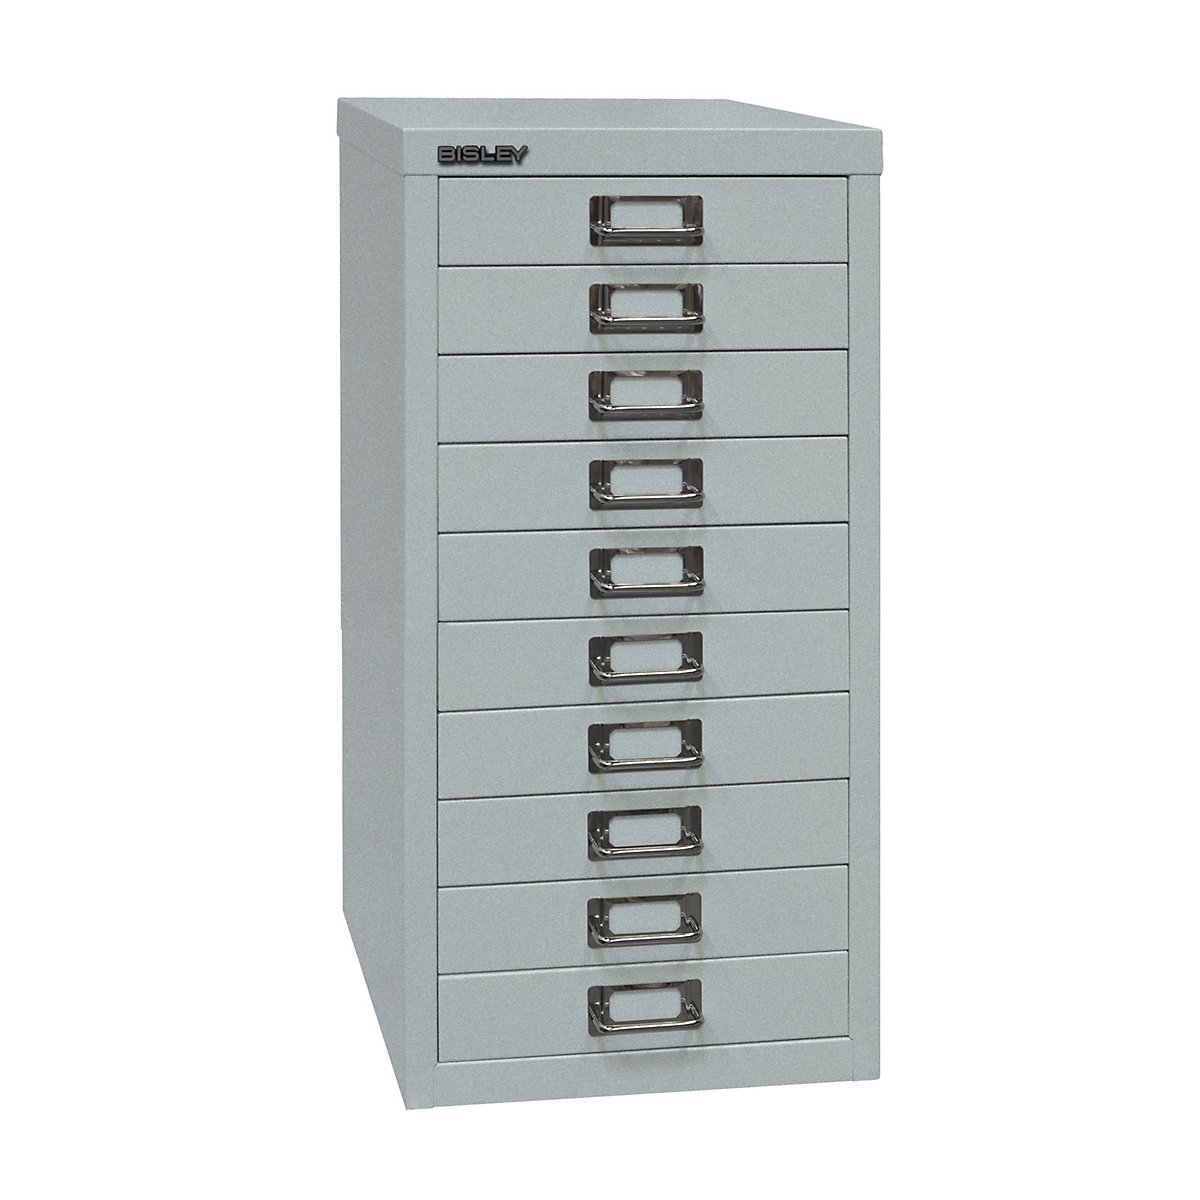 MultiDrawer™ 29 series – BISLEY, A4, 10 drawers, silver-4